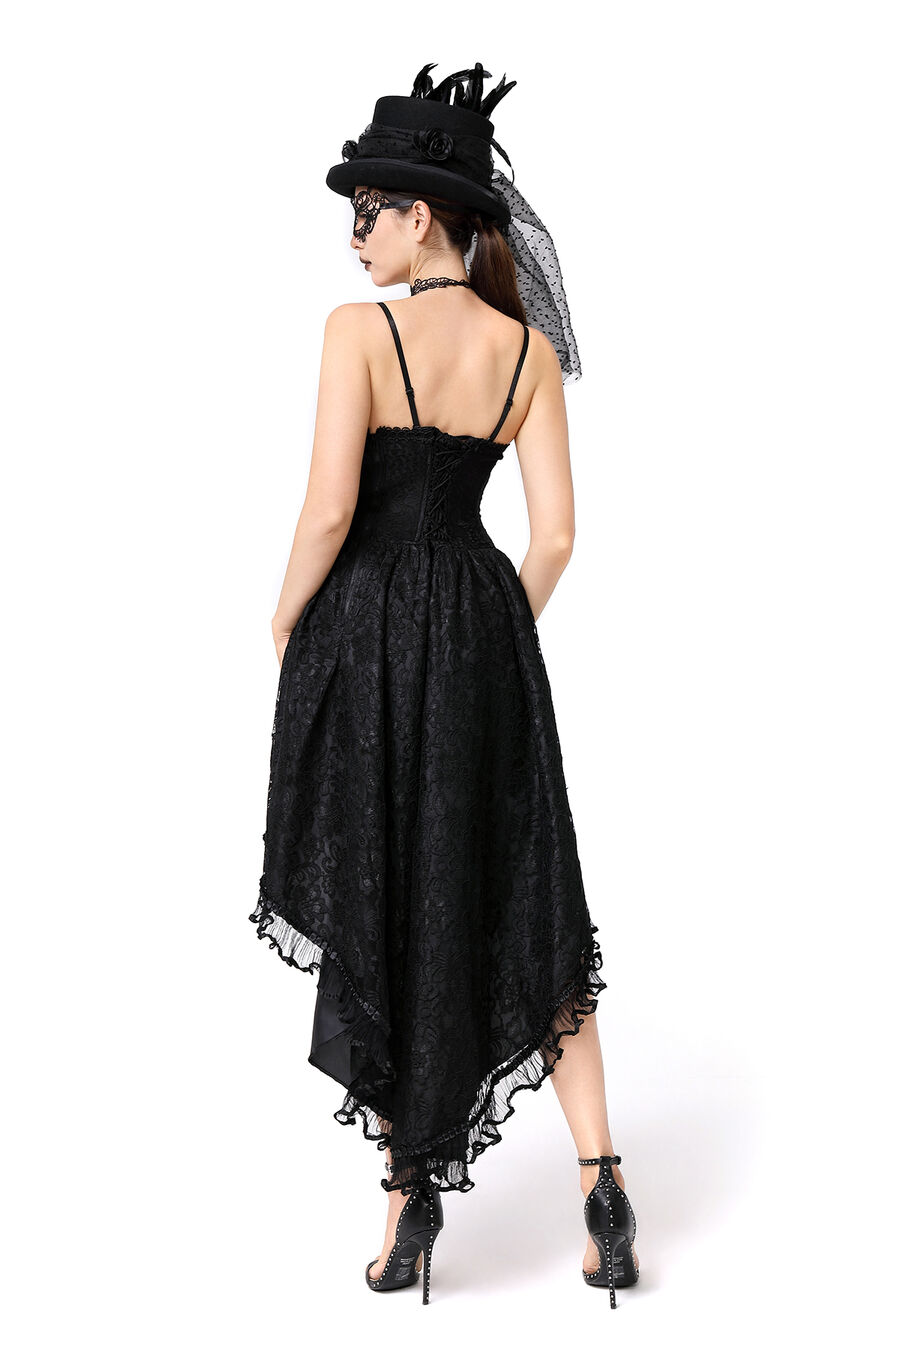 photo n°2 : robes dentelle femme gothique